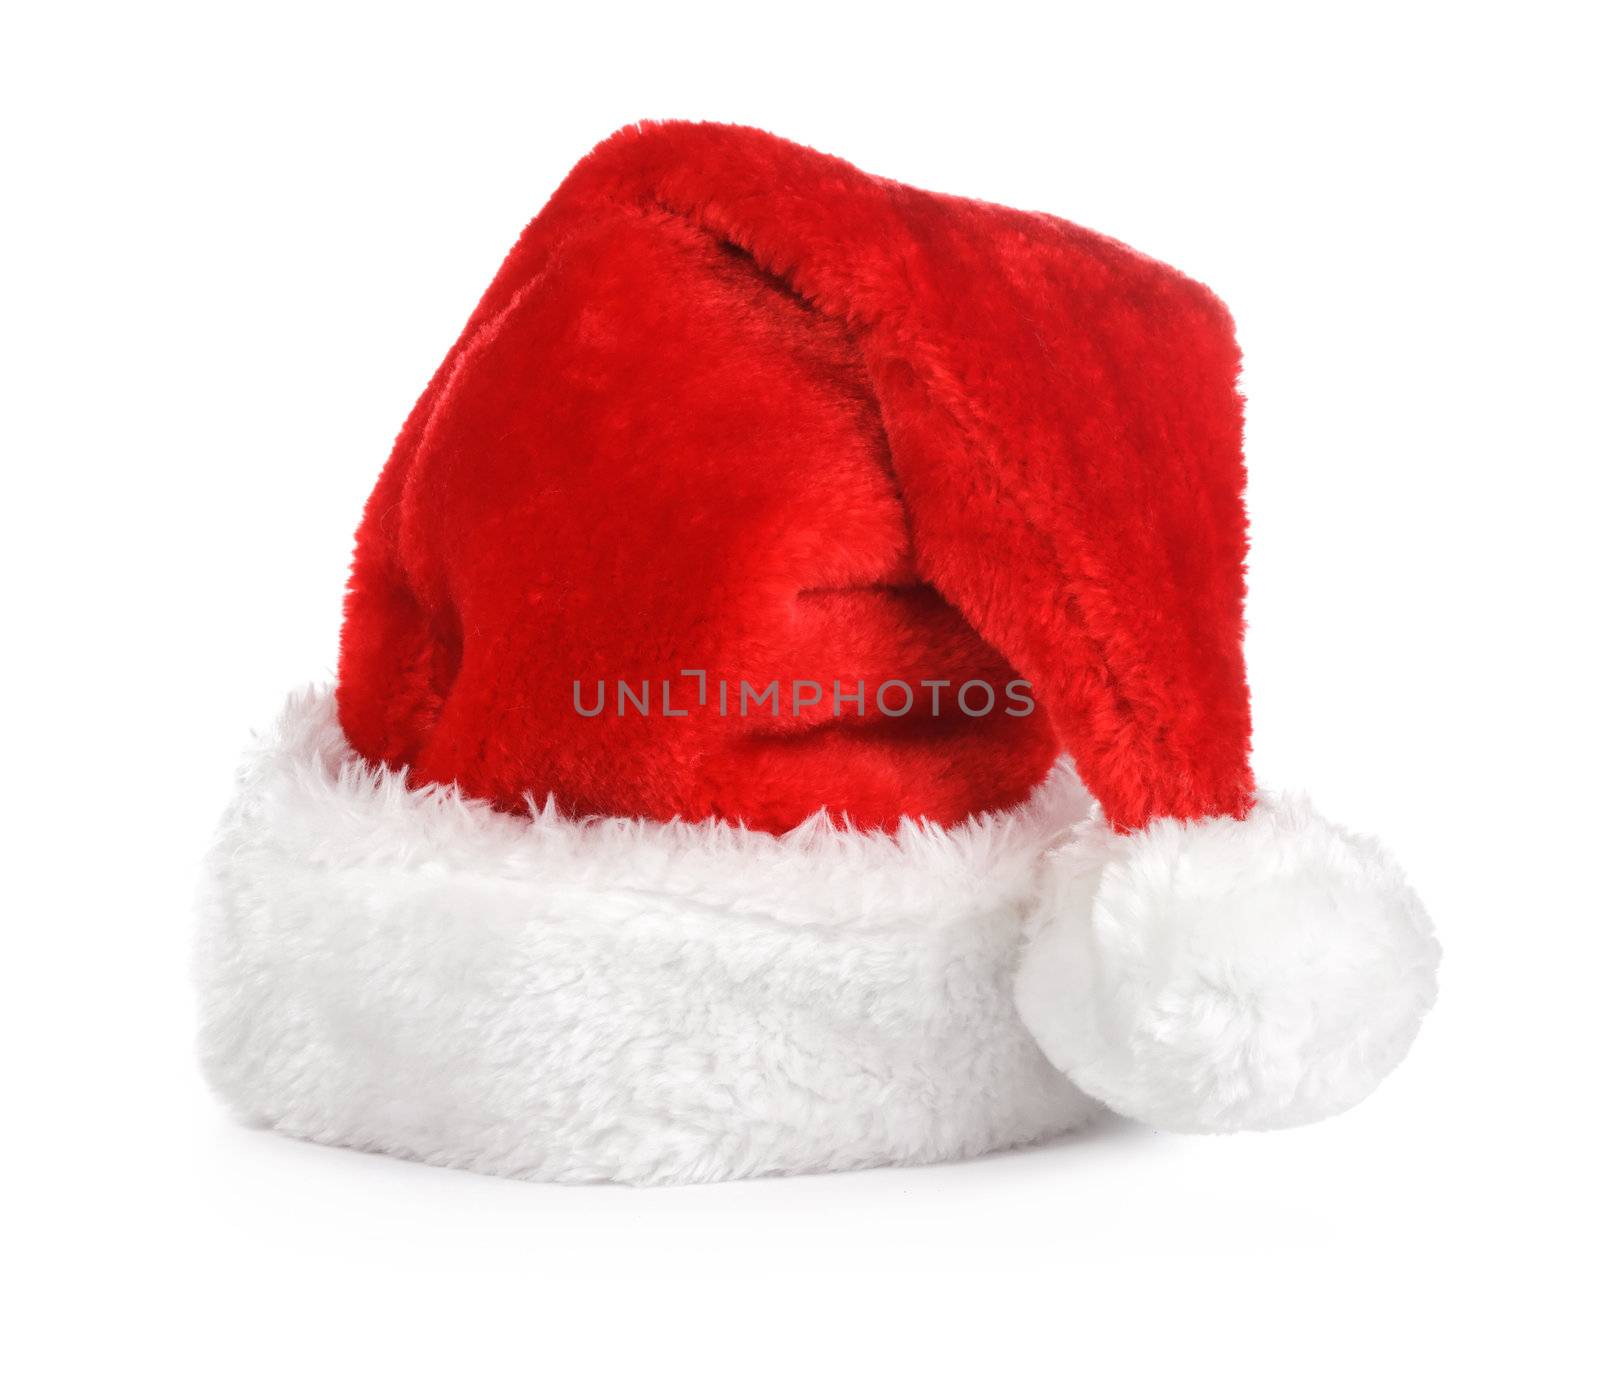 Santa red hat on white background by Bedolaga